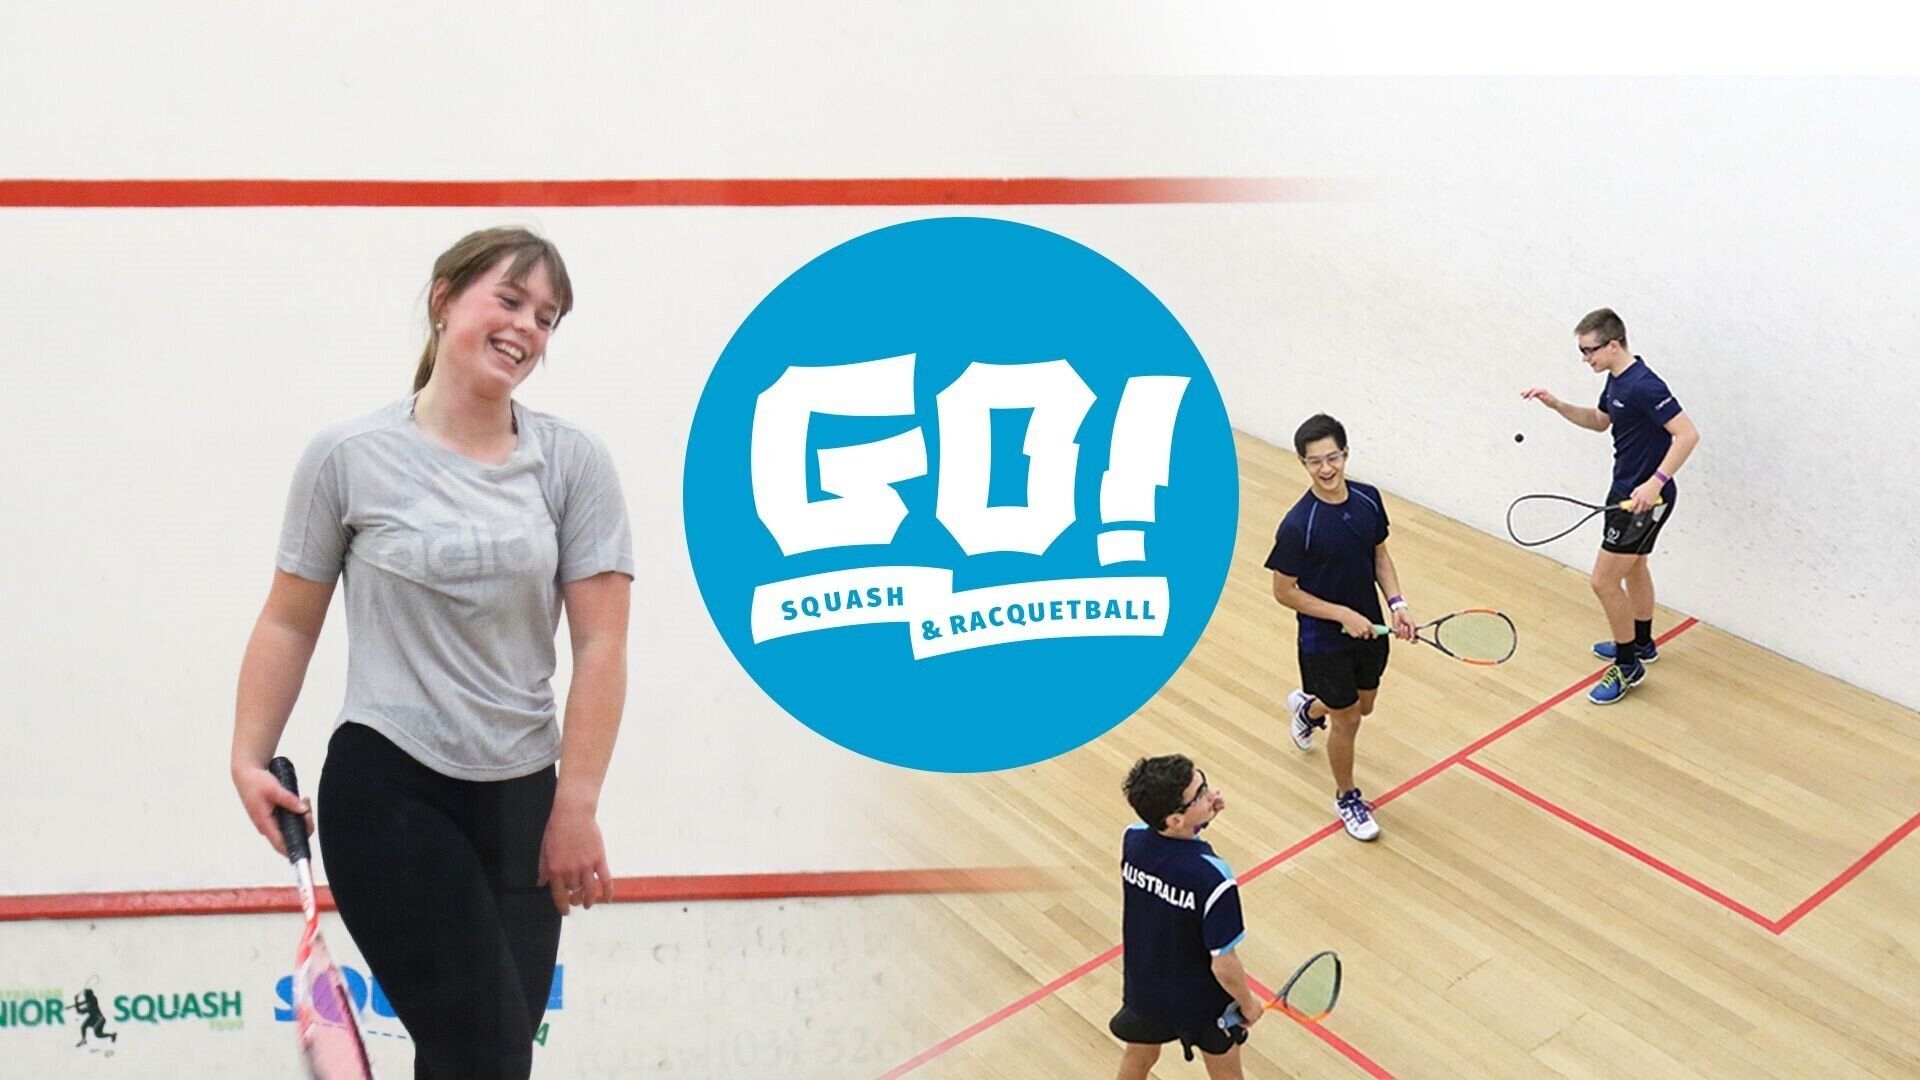 Squash & Racquetball Innovation - Launching a New Program